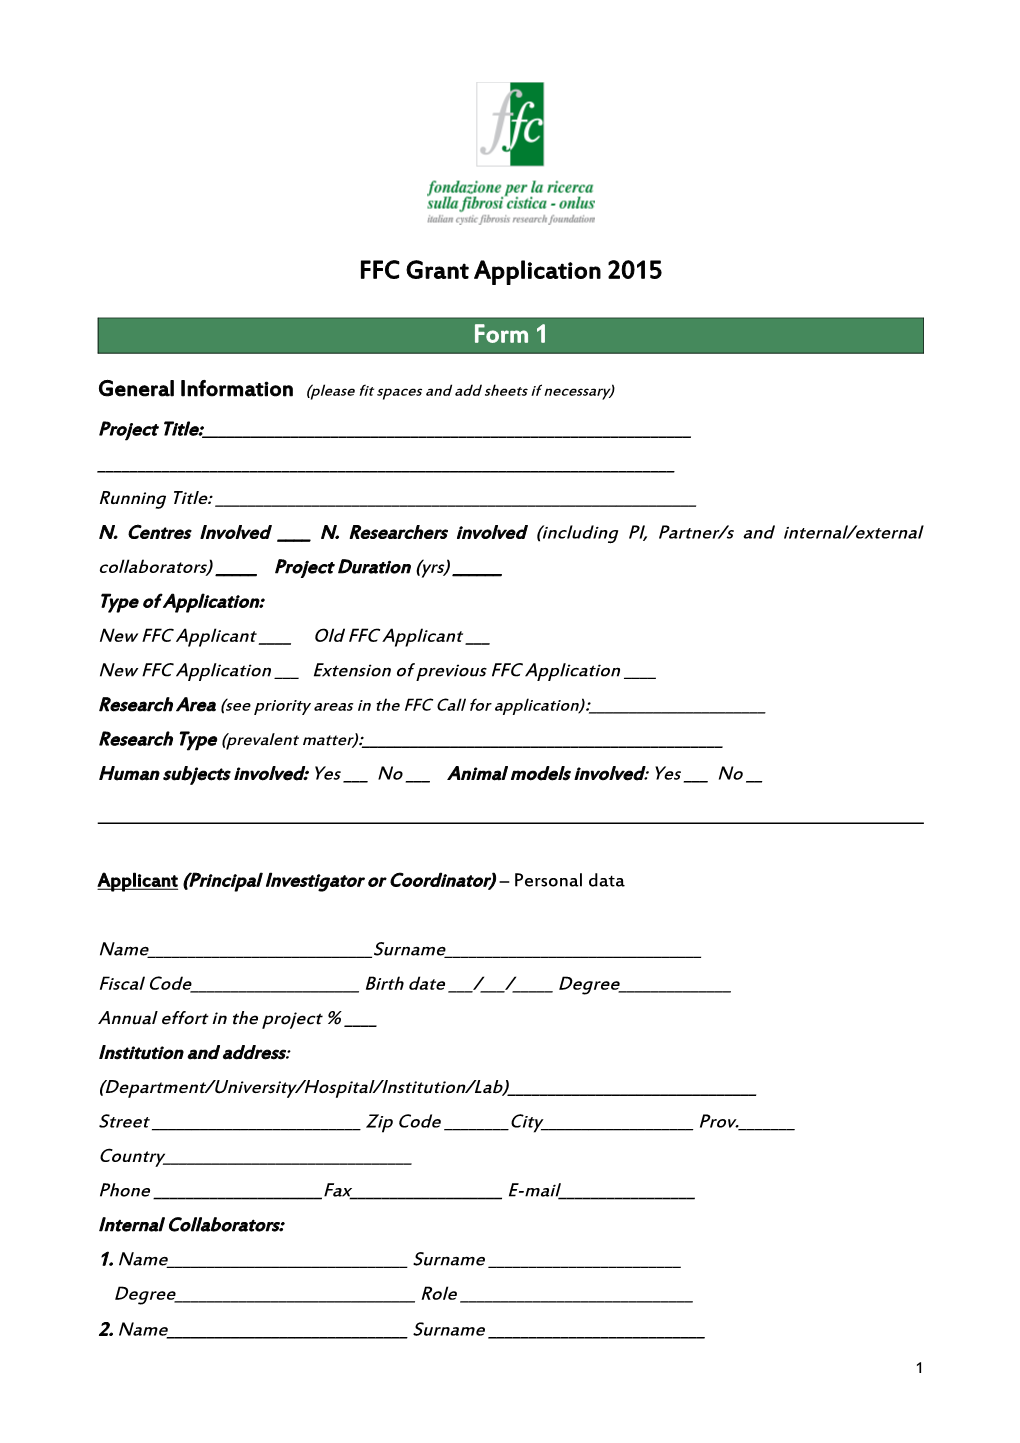 FFC Grant Application 2015